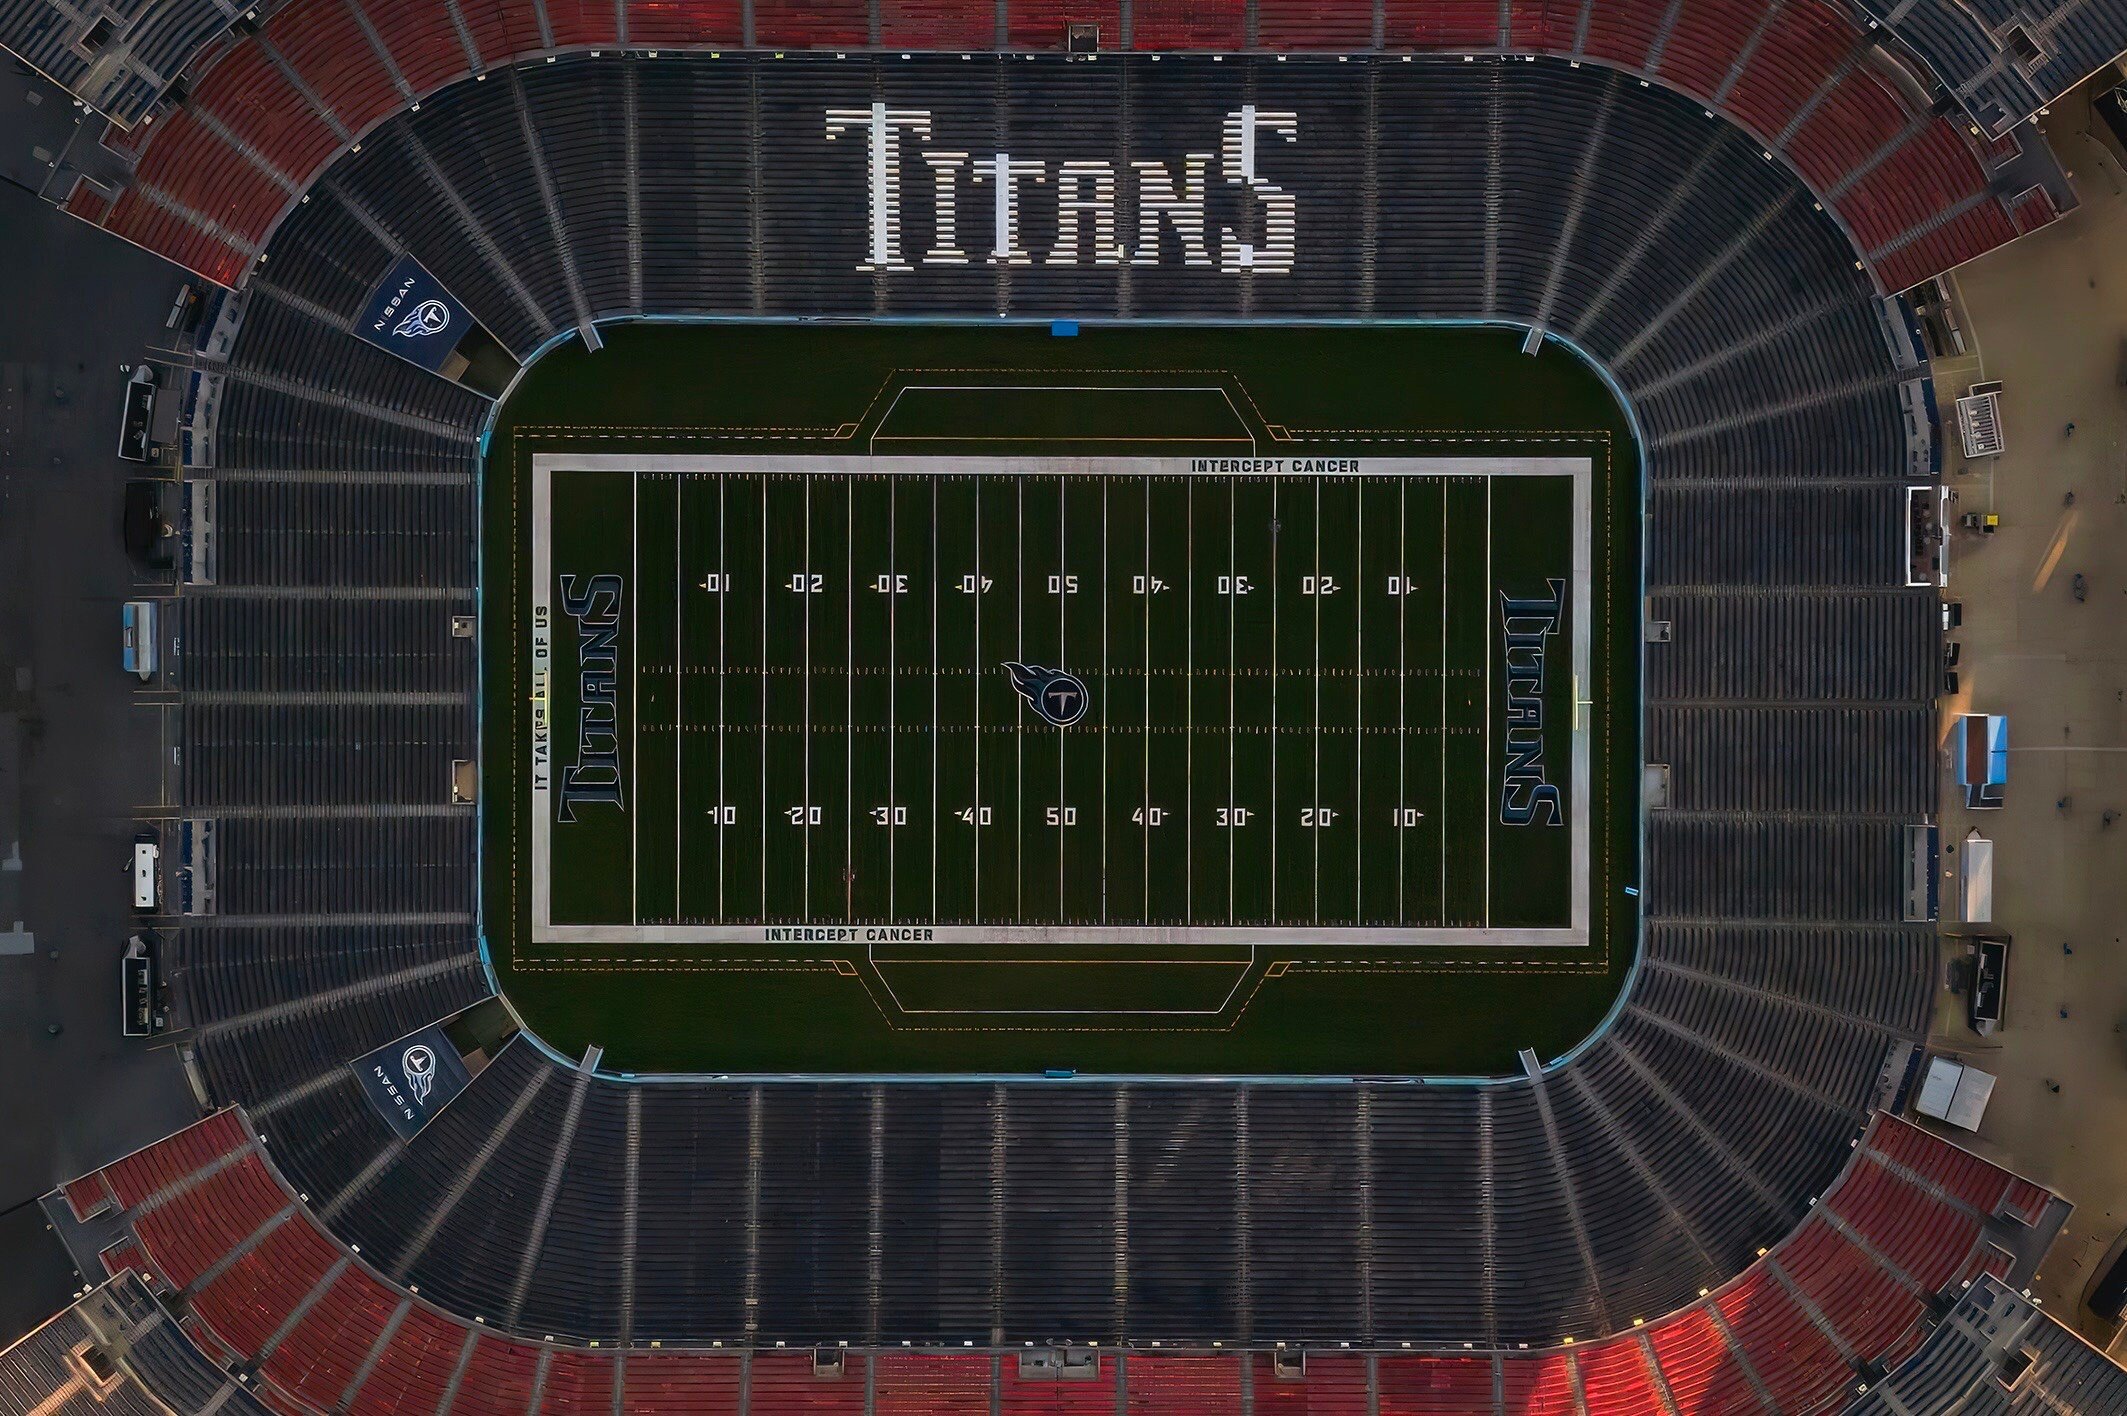 Tennessee Titans Nissan Stadium | NFL Memorabilia Prints Music City Football Downtown Nashville Derrick Henry Sports Man Cave Decor